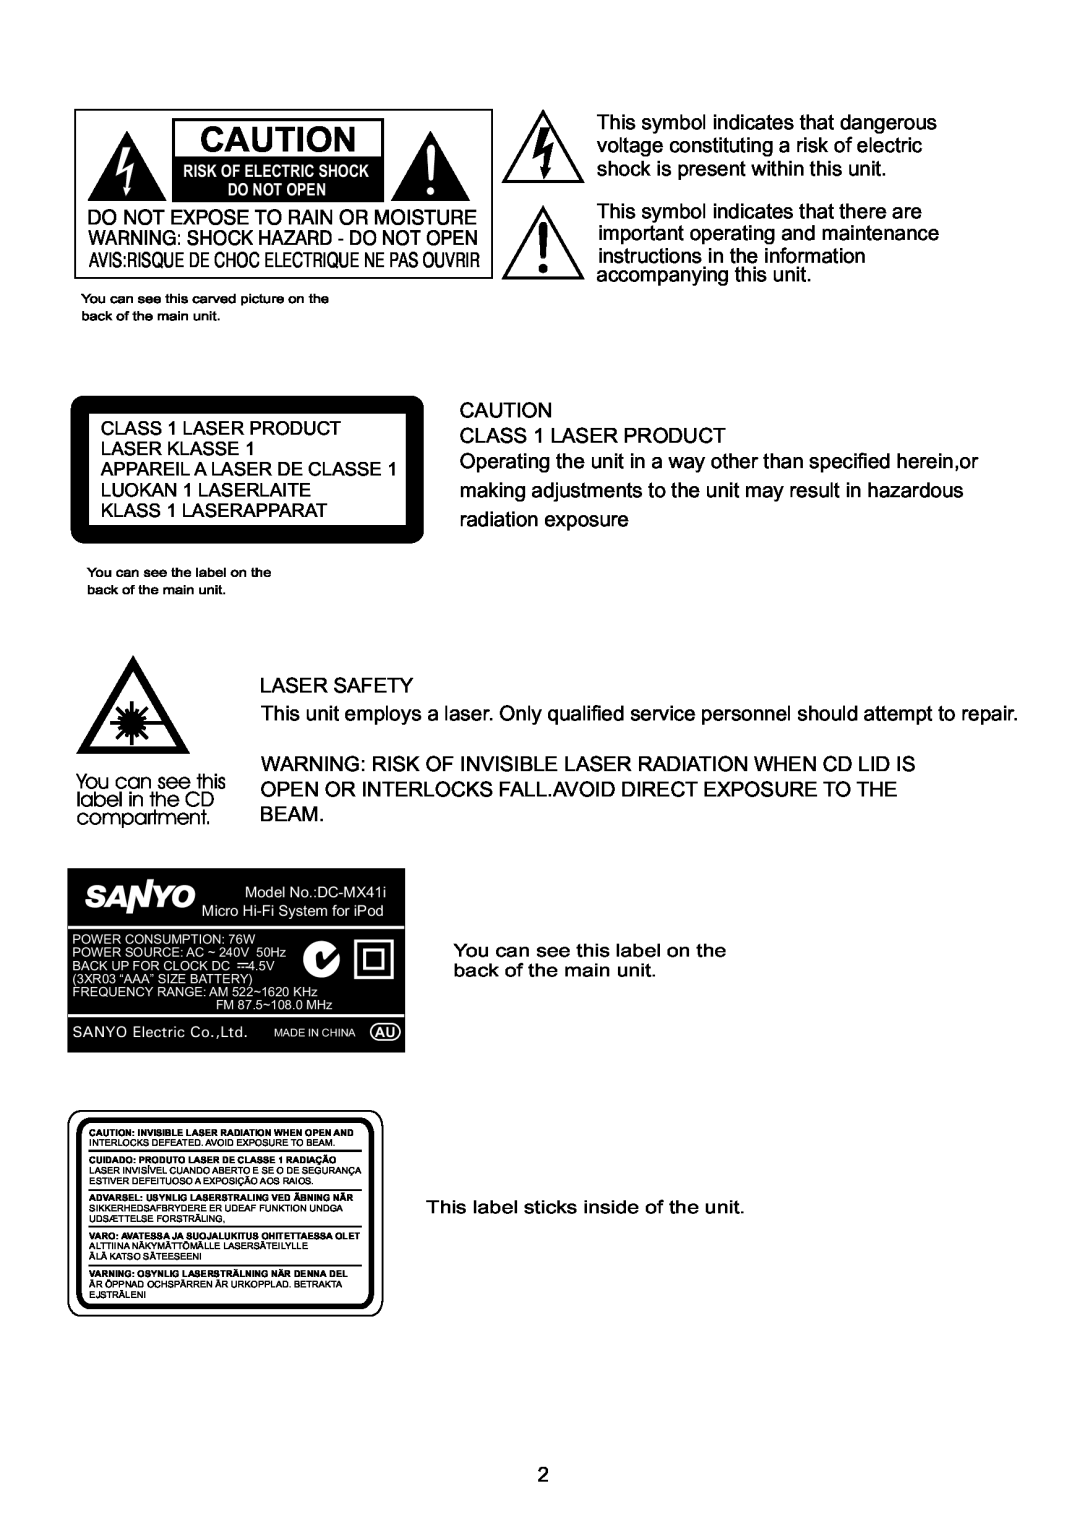 Sanyo DC-MX41i instruction manual Do Not Expose To Rain Or Moisture 